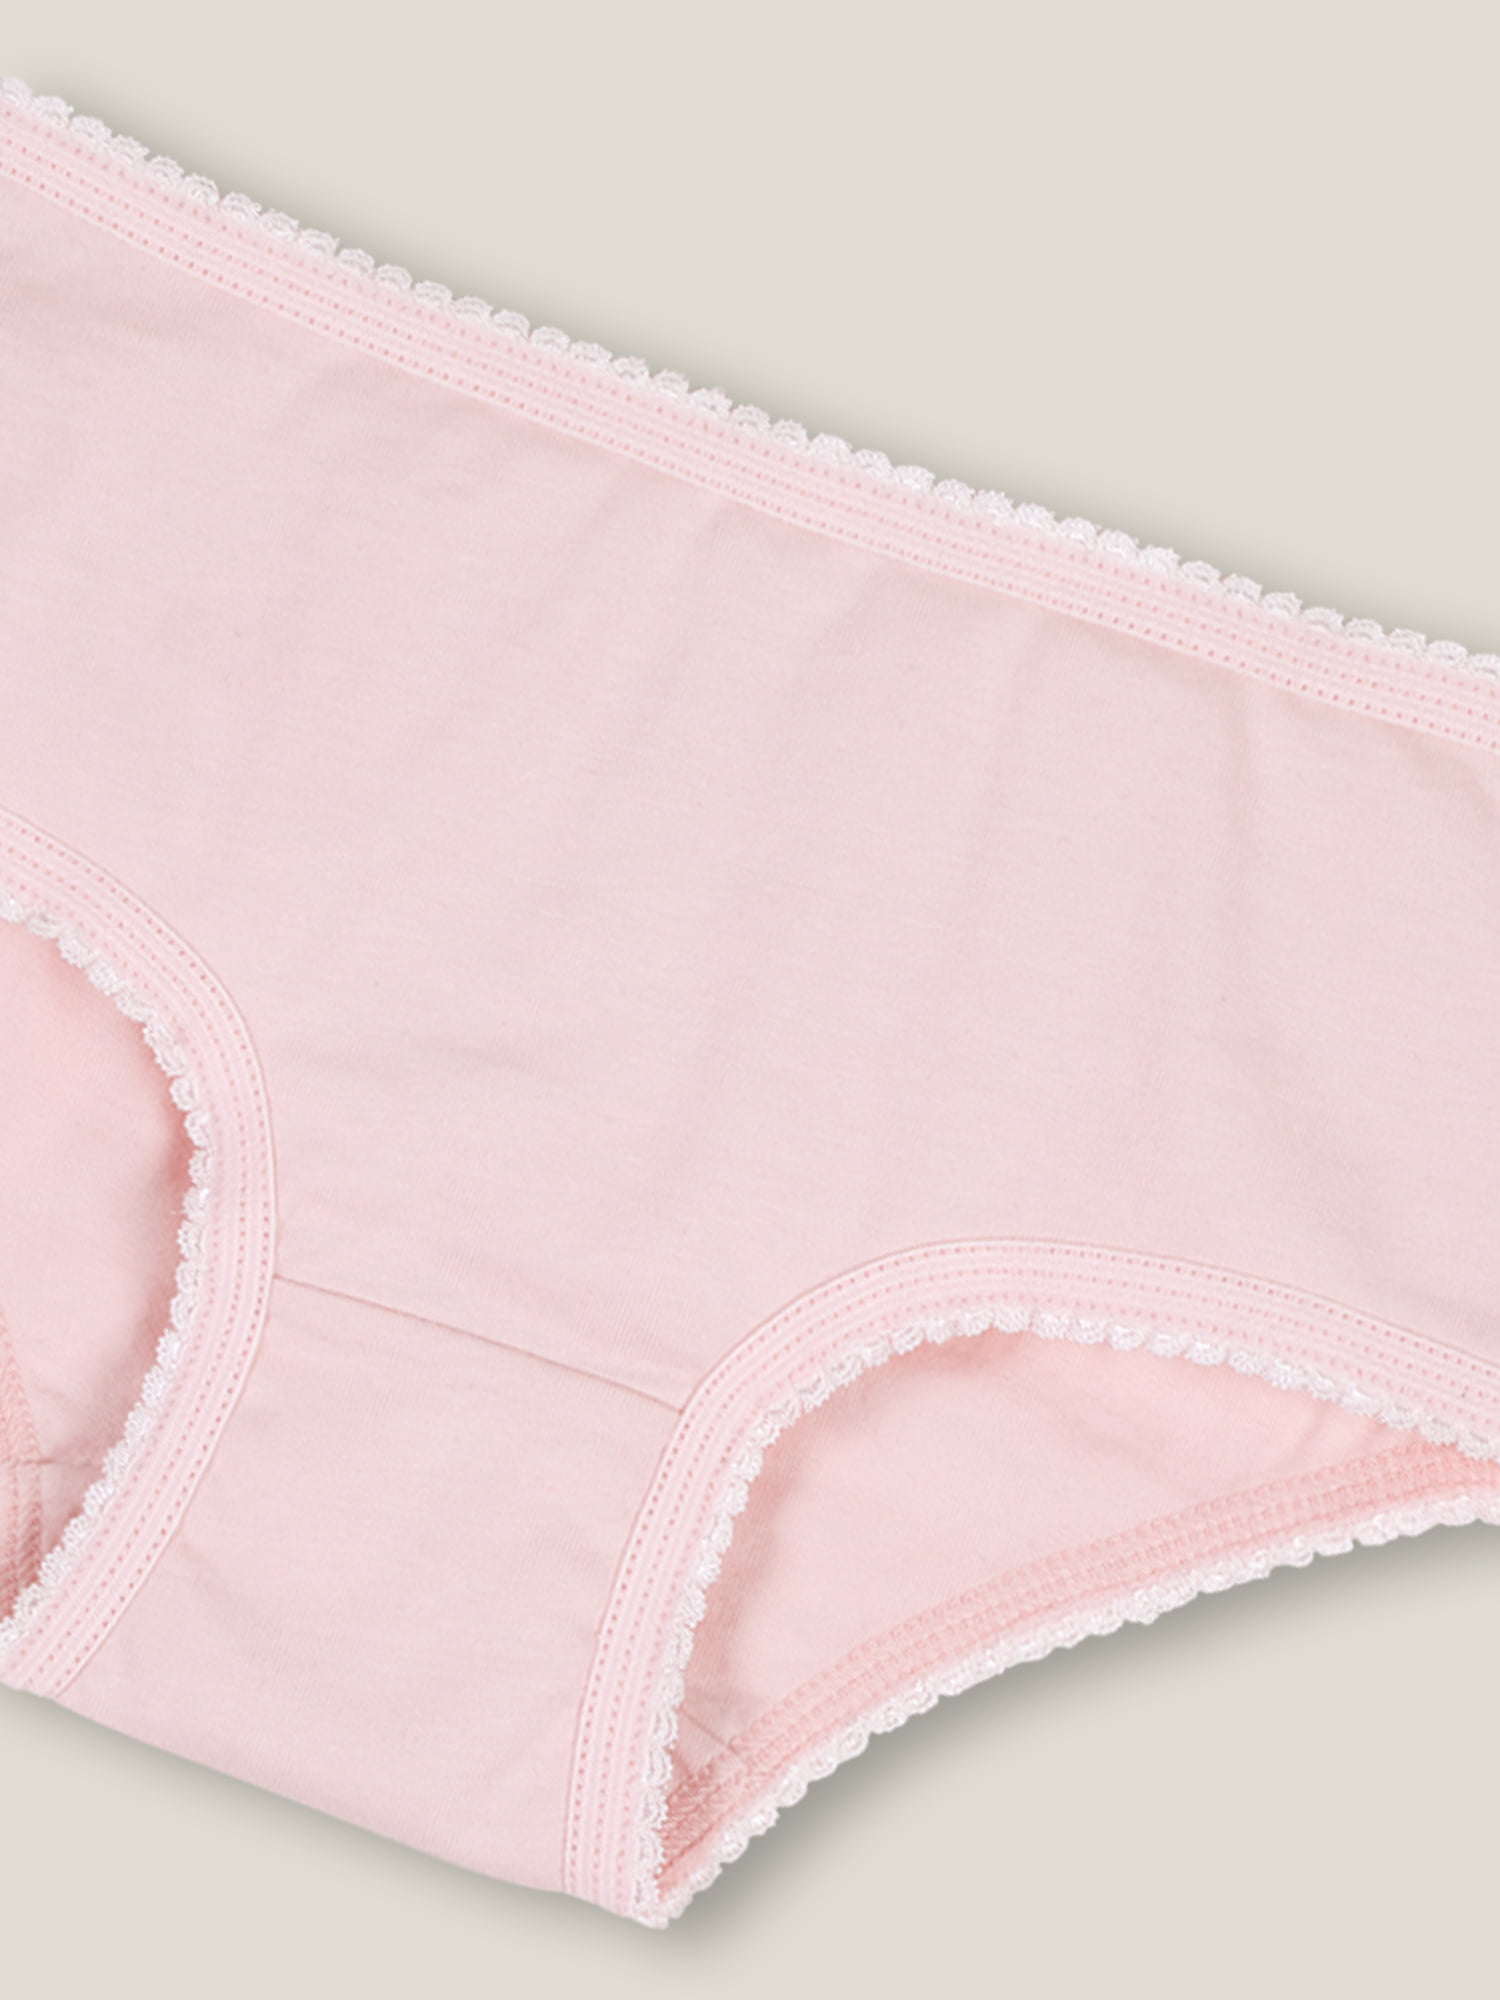 Little Star Organic Toddler Girl Brief Underwear Panties,10PK, Sizes 2T-5T  